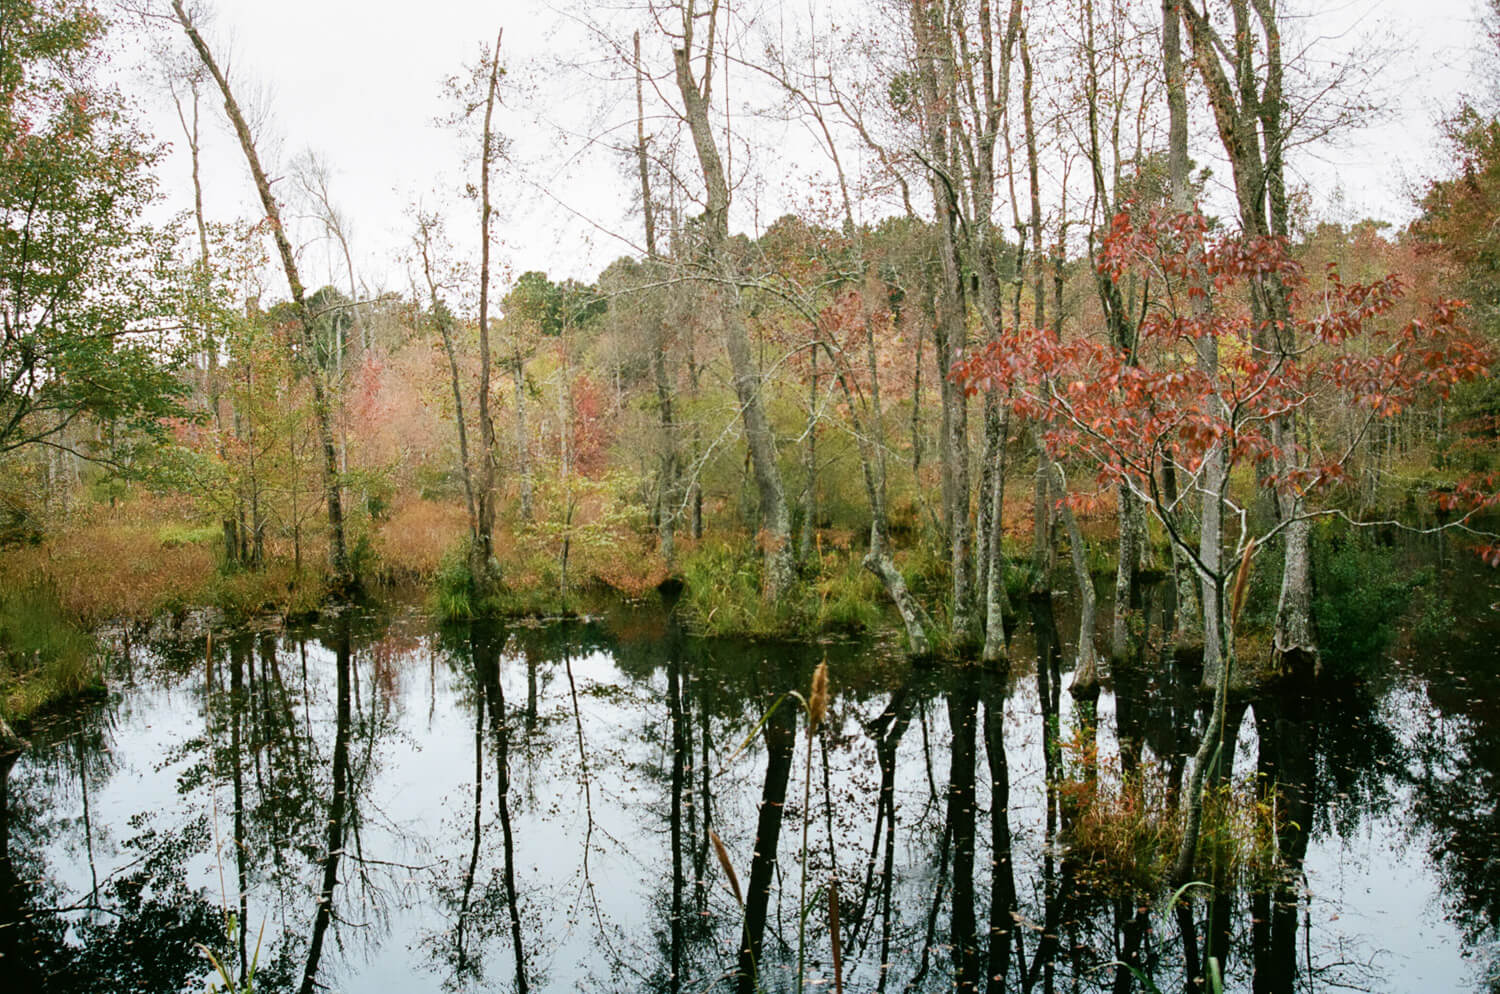 Beaver pond - October 8 9:06 AM